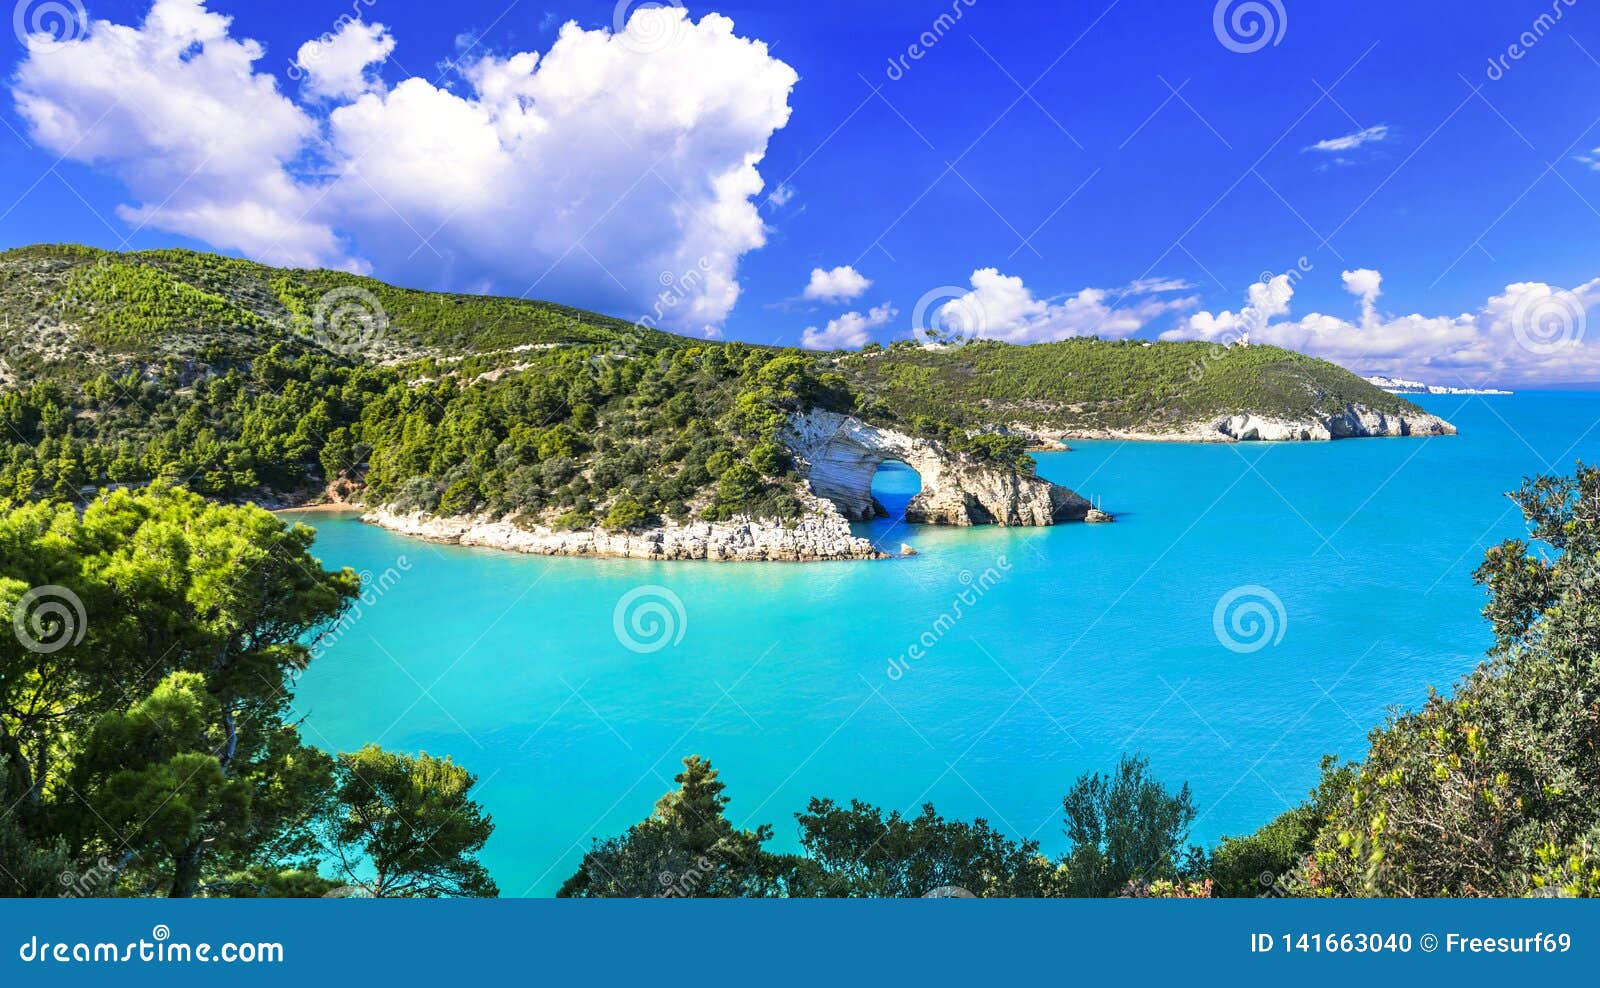 italian holidays in puglia - natural park gargano with beautiful turquoise sea